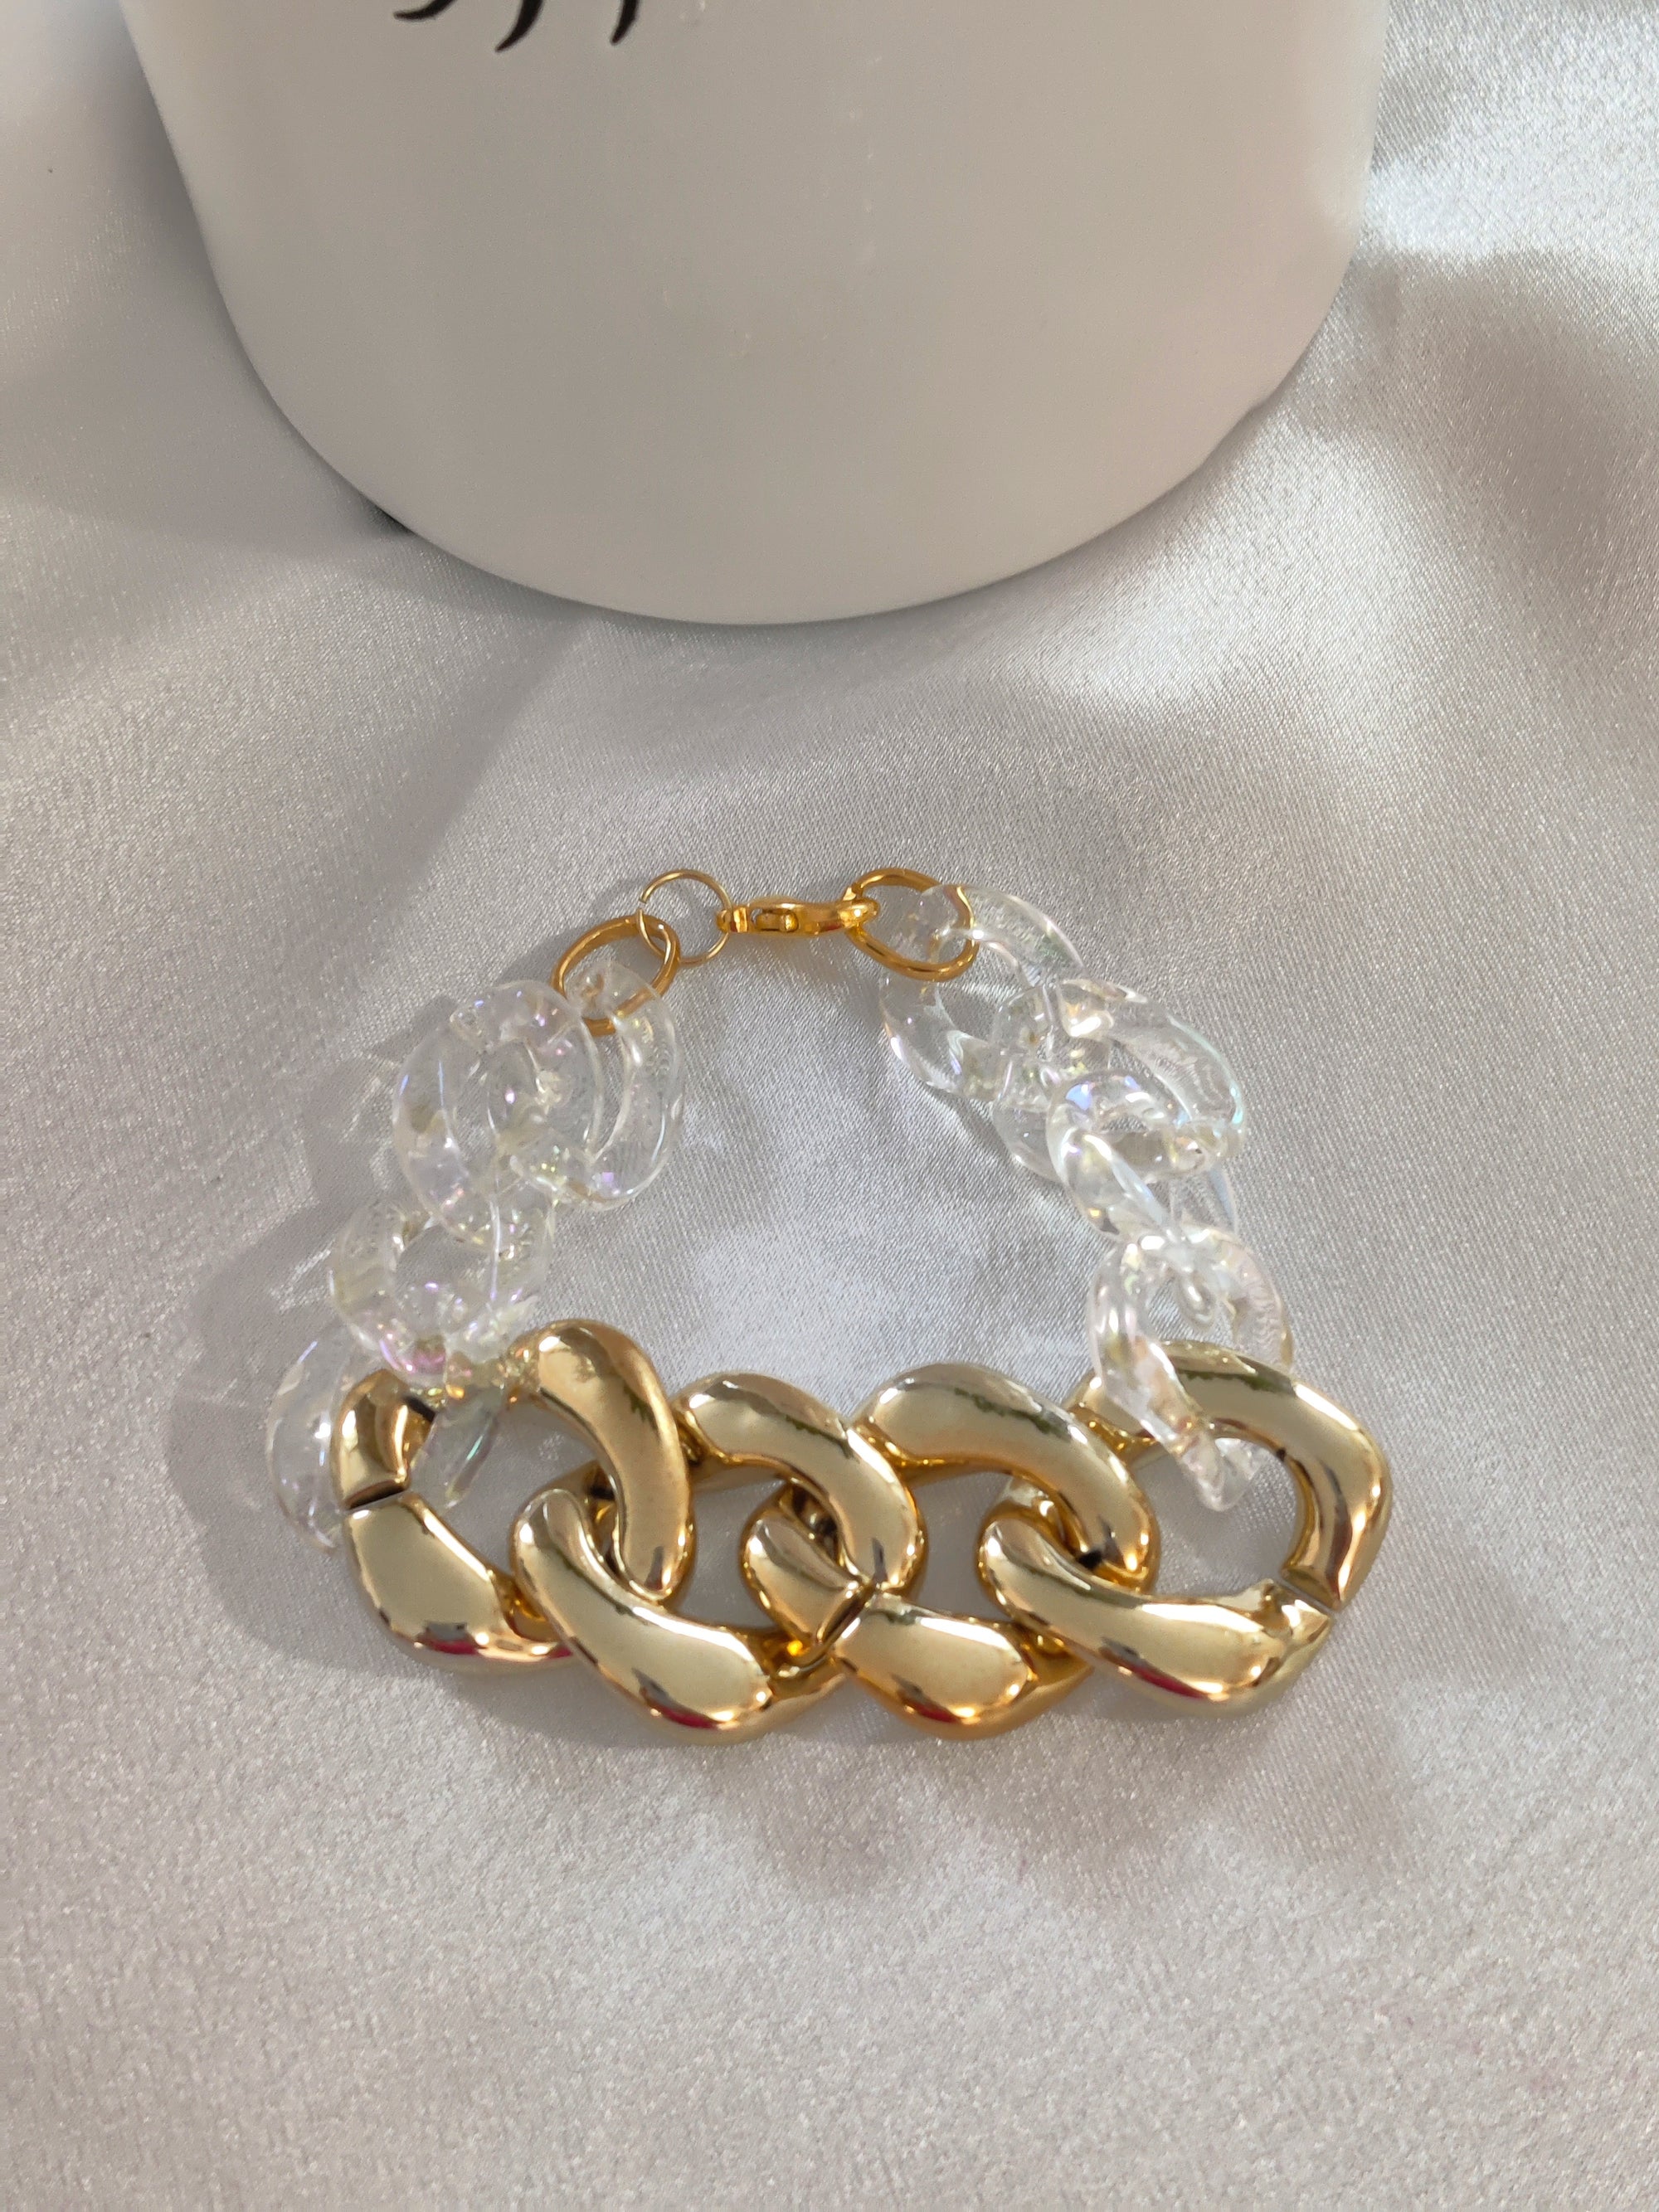 chunky chain bracelet